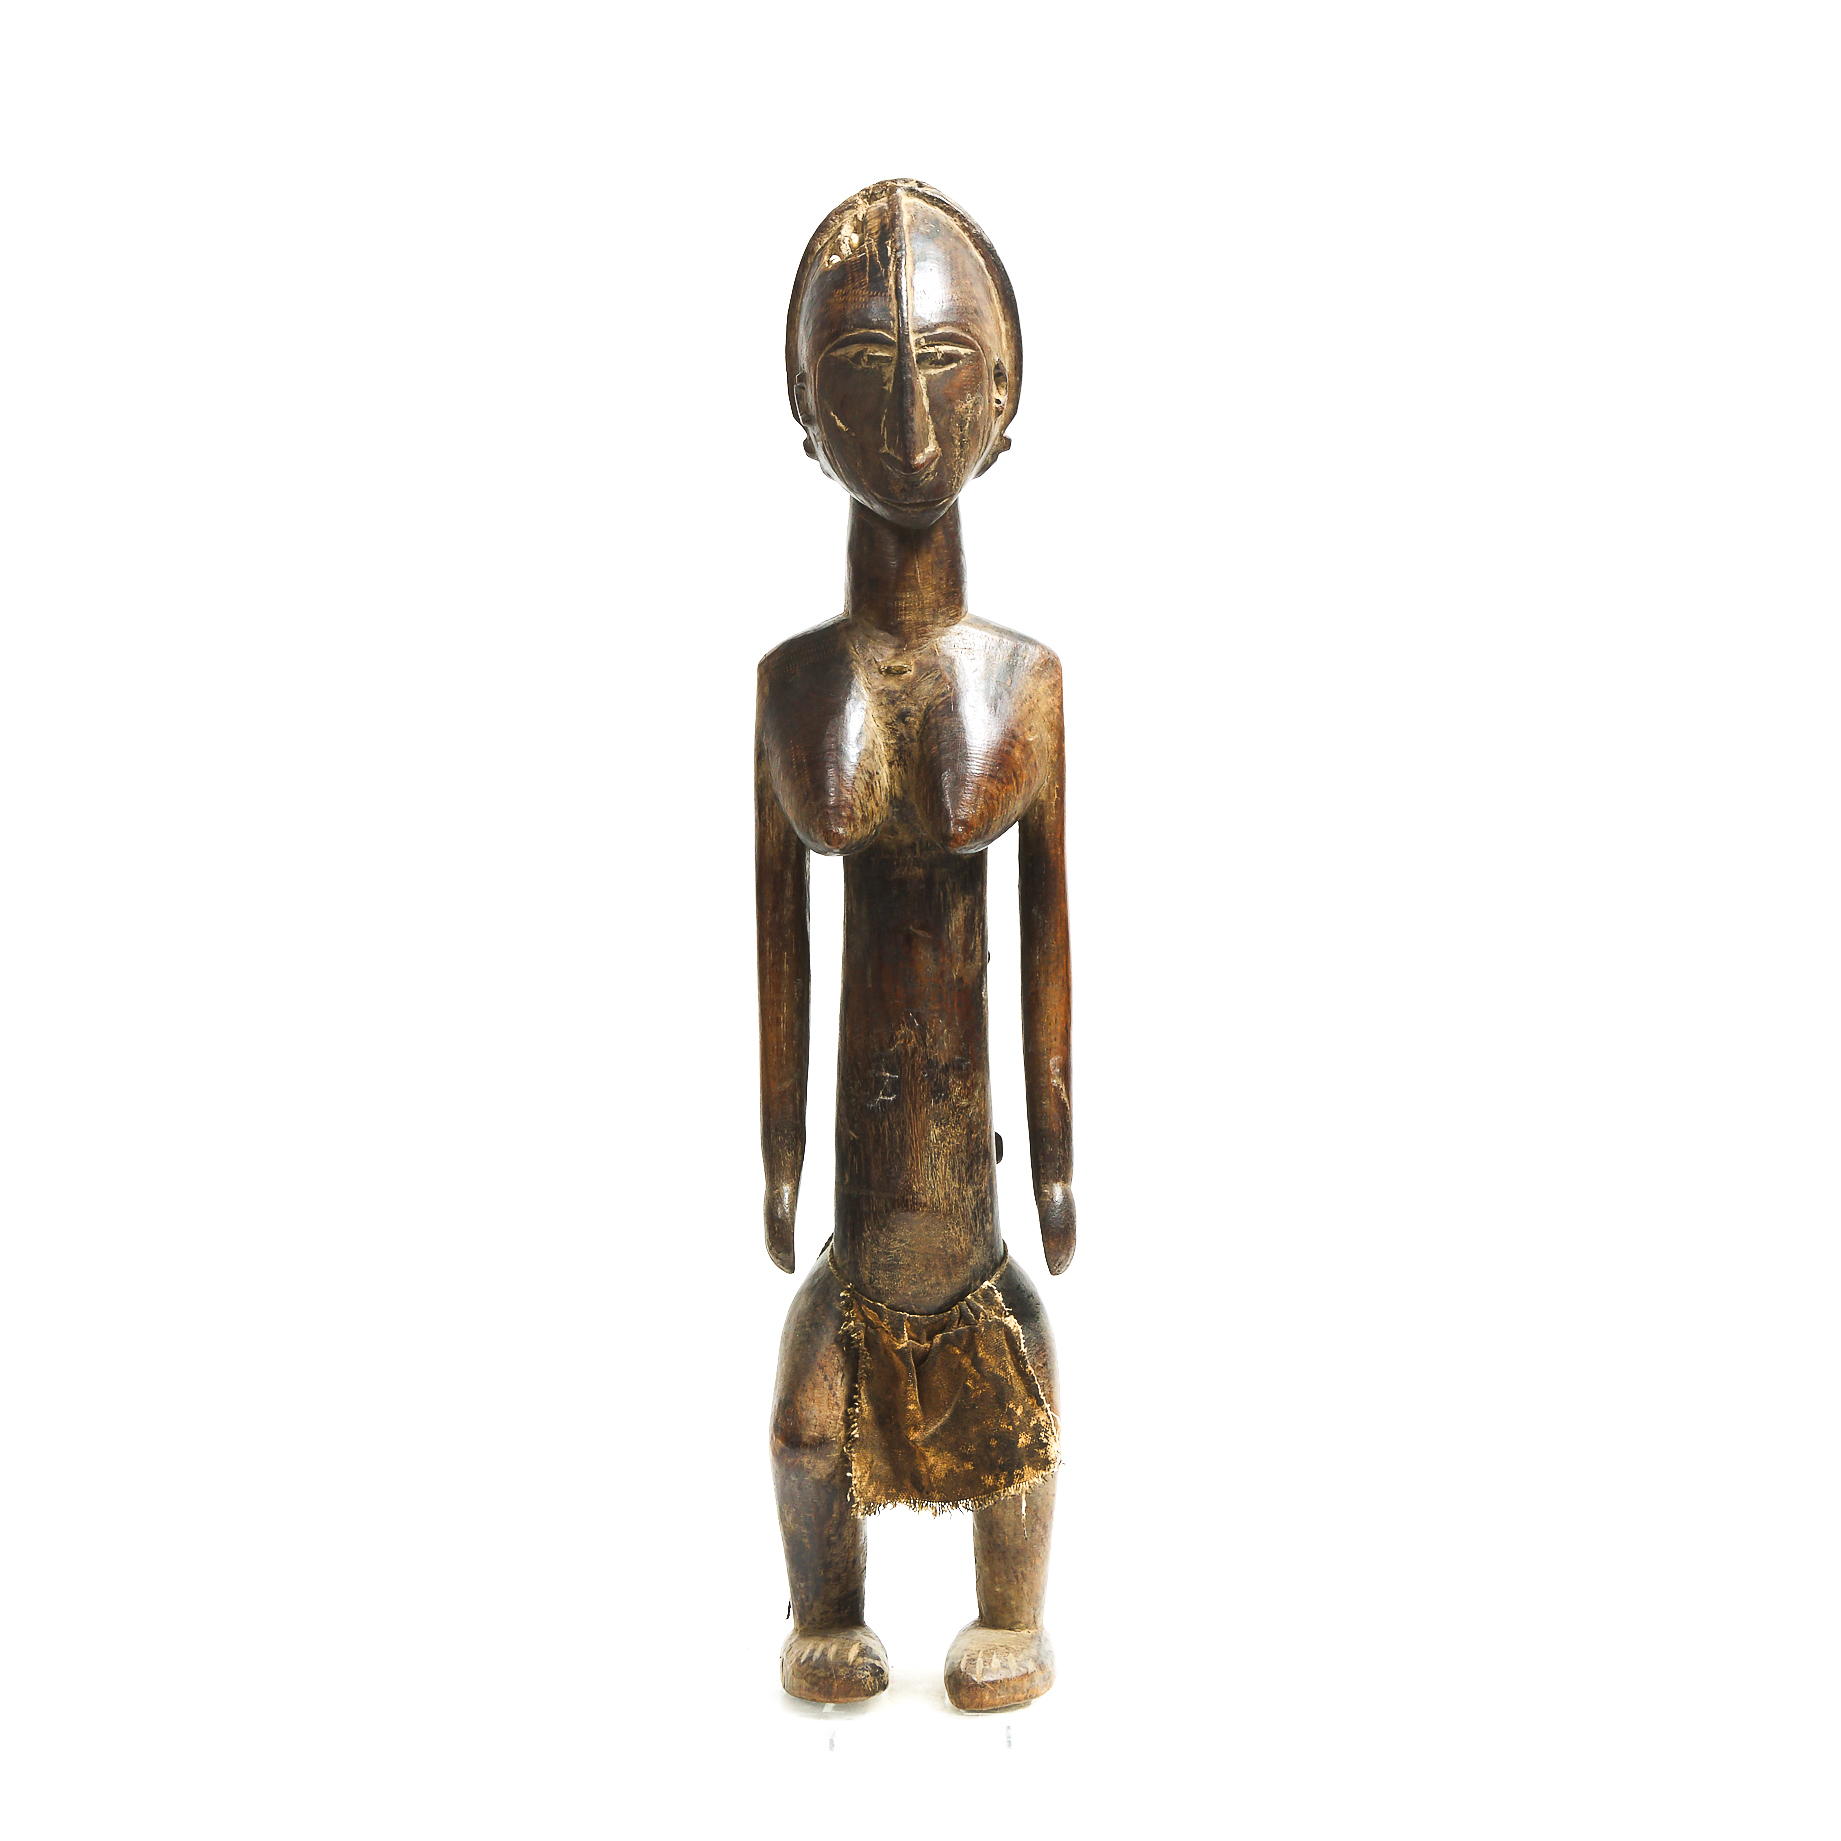 Bamana Maternity Figure, Mali, West Africa, early 20th century